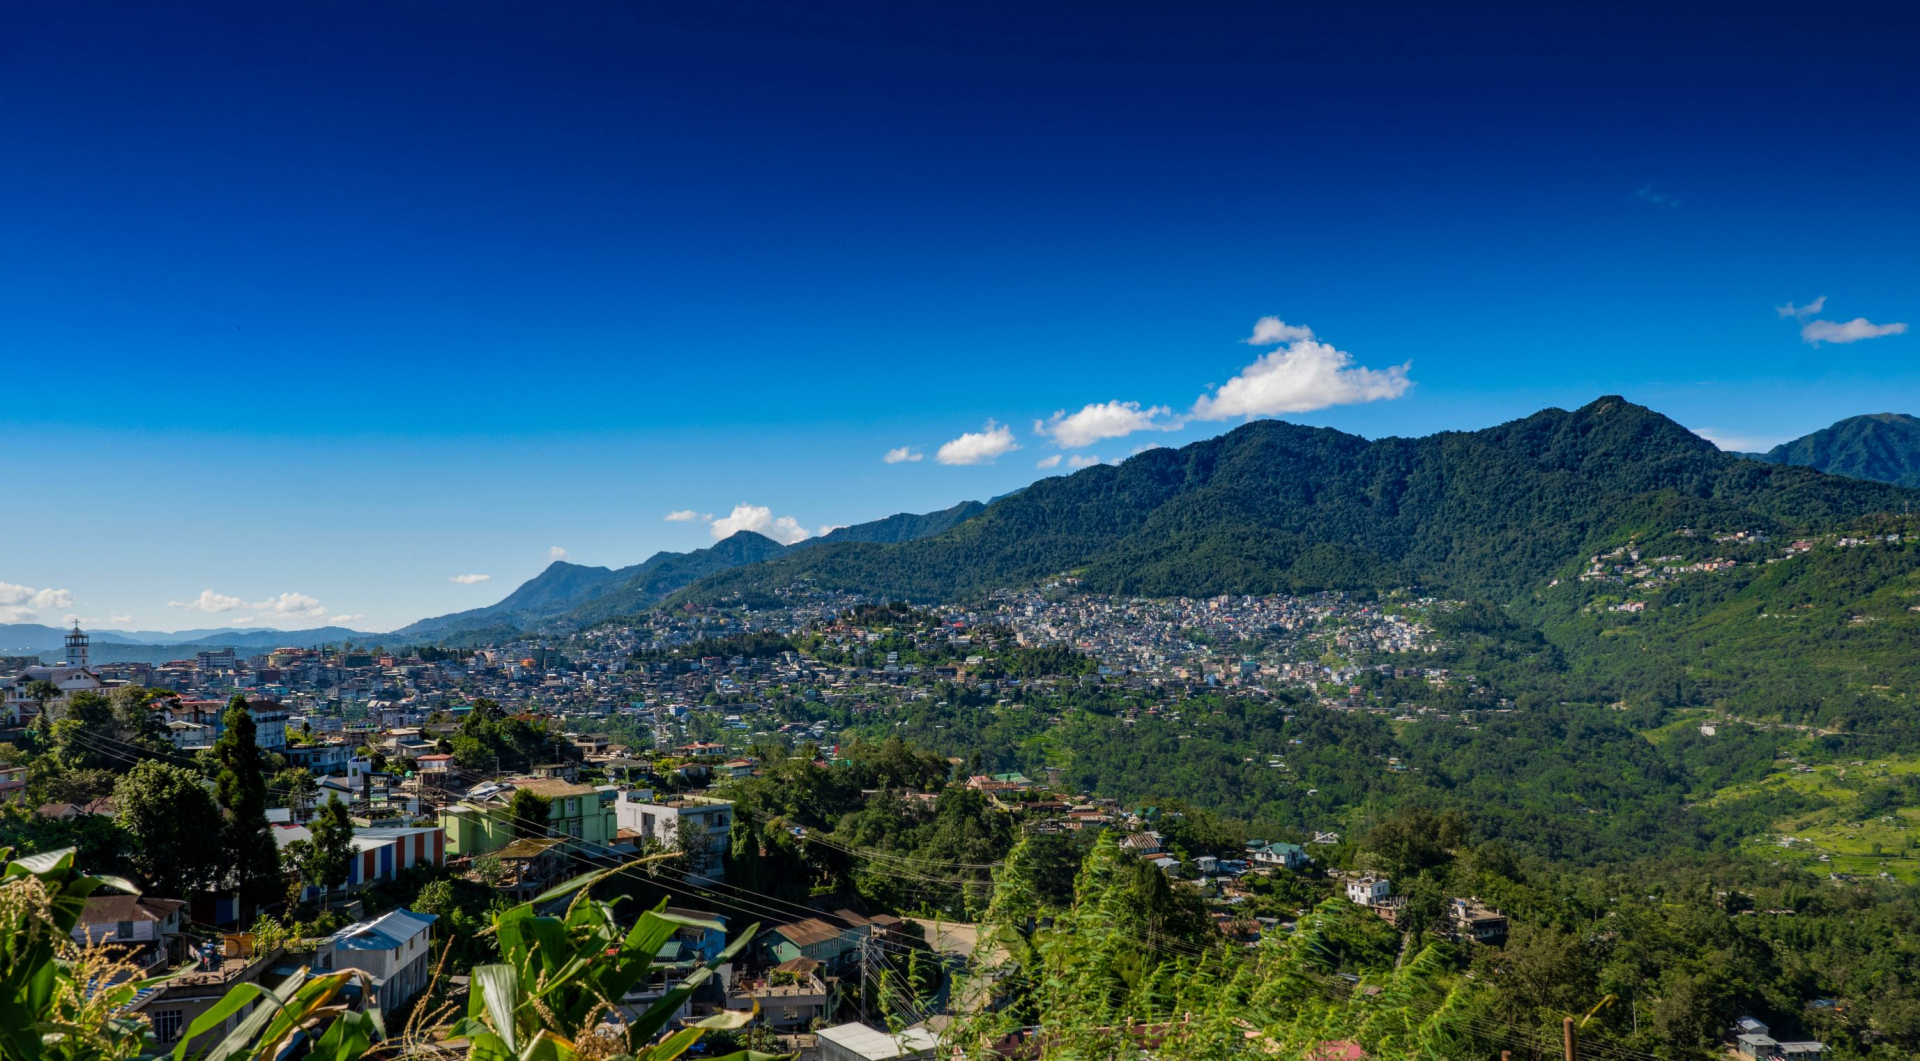 The landscape in Kohima, Nagaland